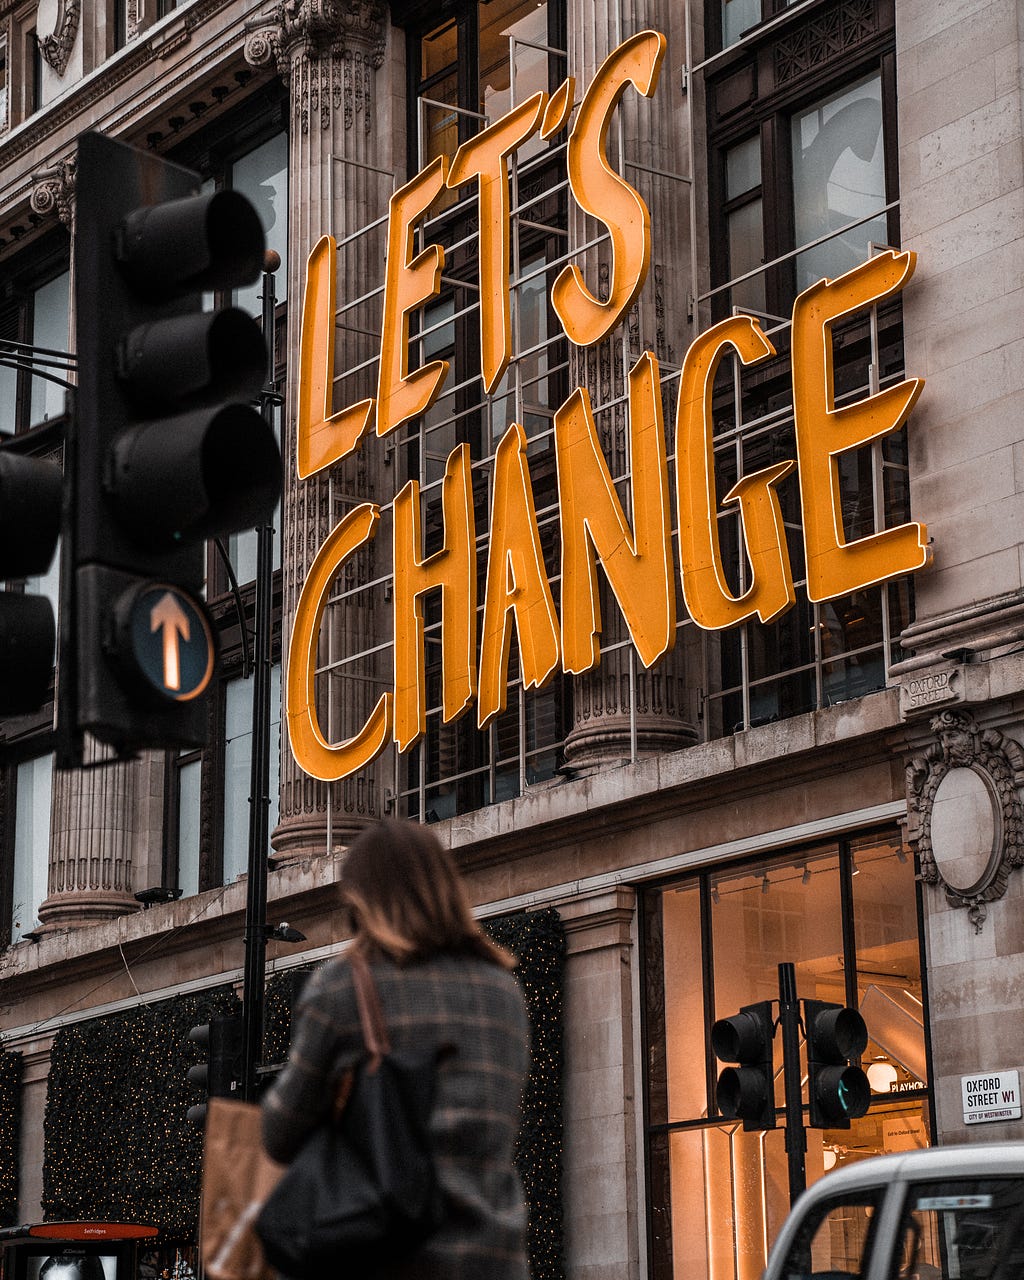 “Let’s Change” sign on a building